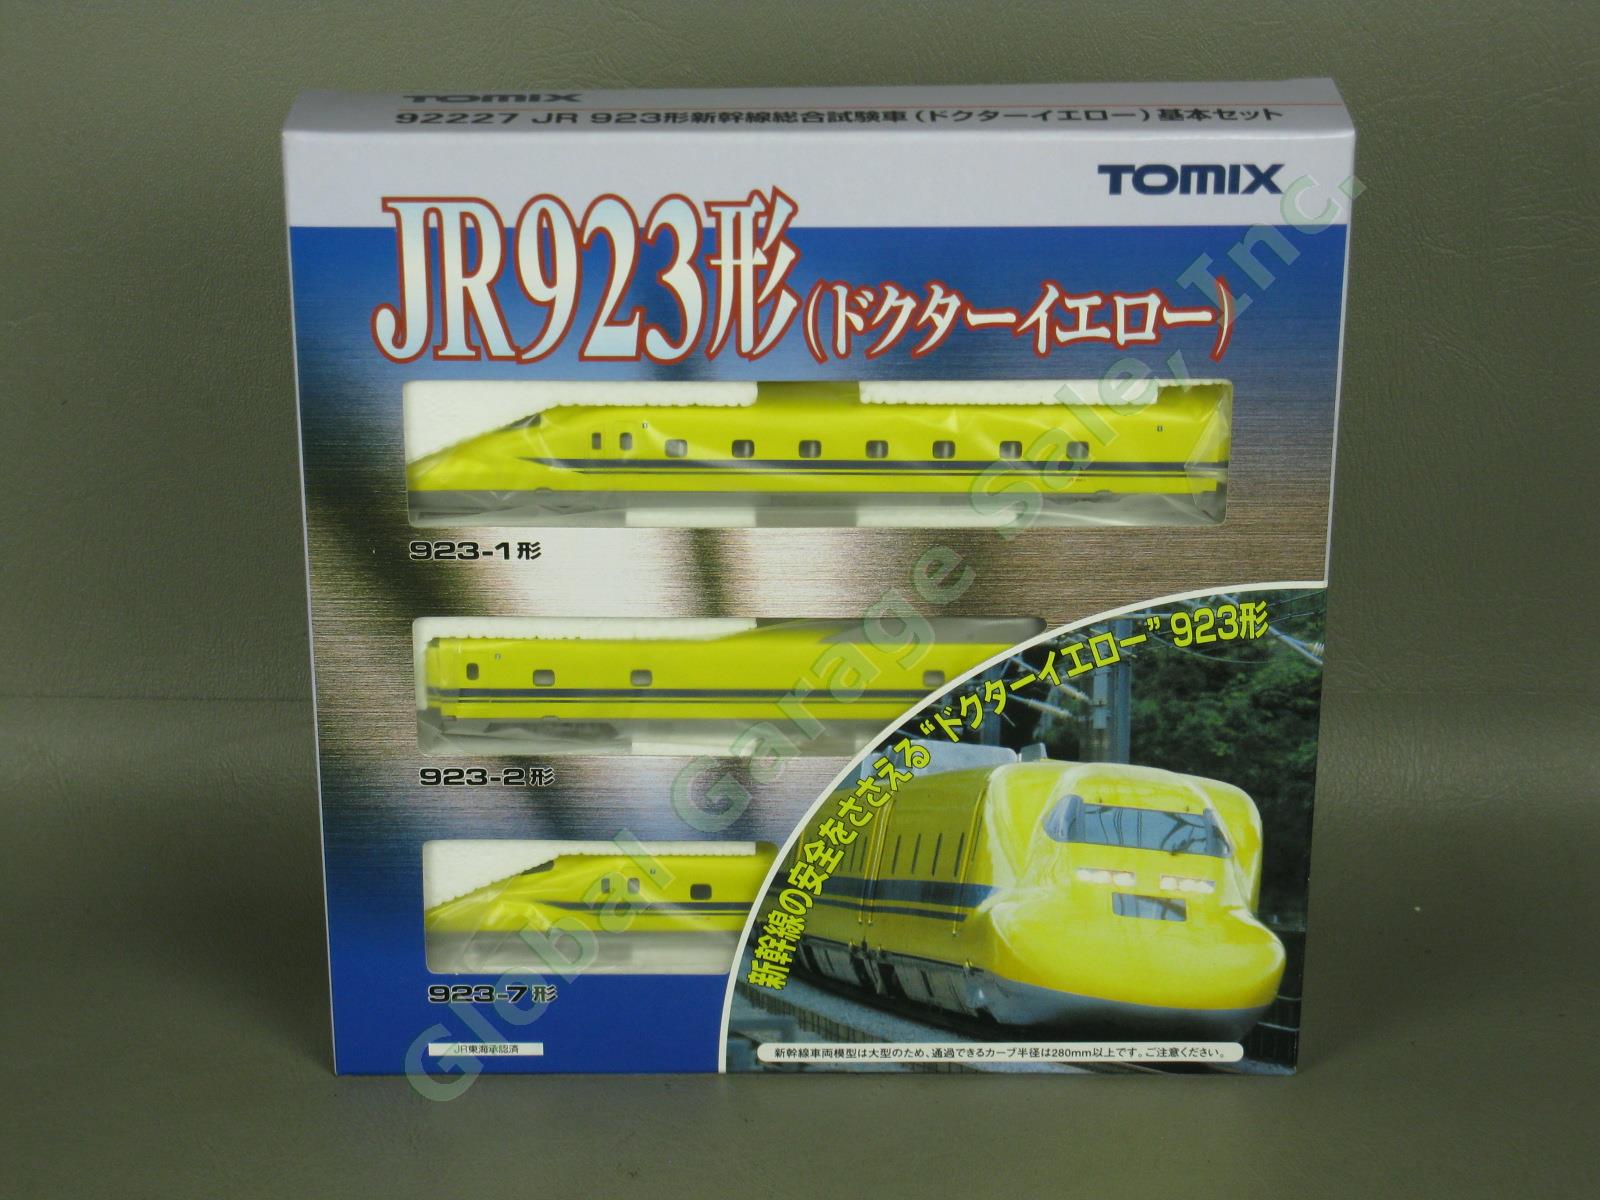 NEW Tomix 92227 JR 923 Shinkansen Bullet Train Doctor Yellow Inspection Cars Set